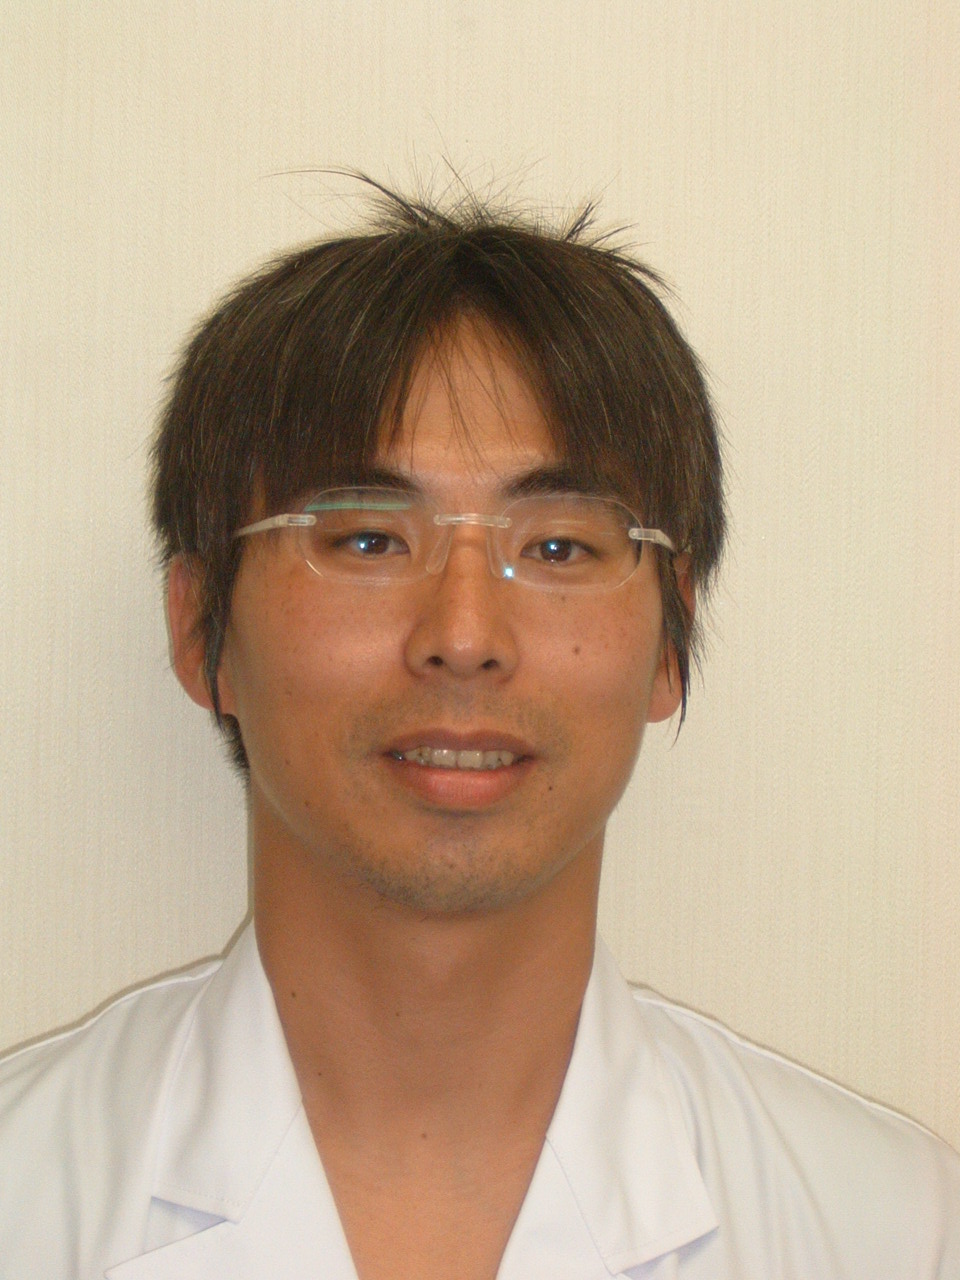 DR_YAMASHITA.JPG - 291,352BYTES